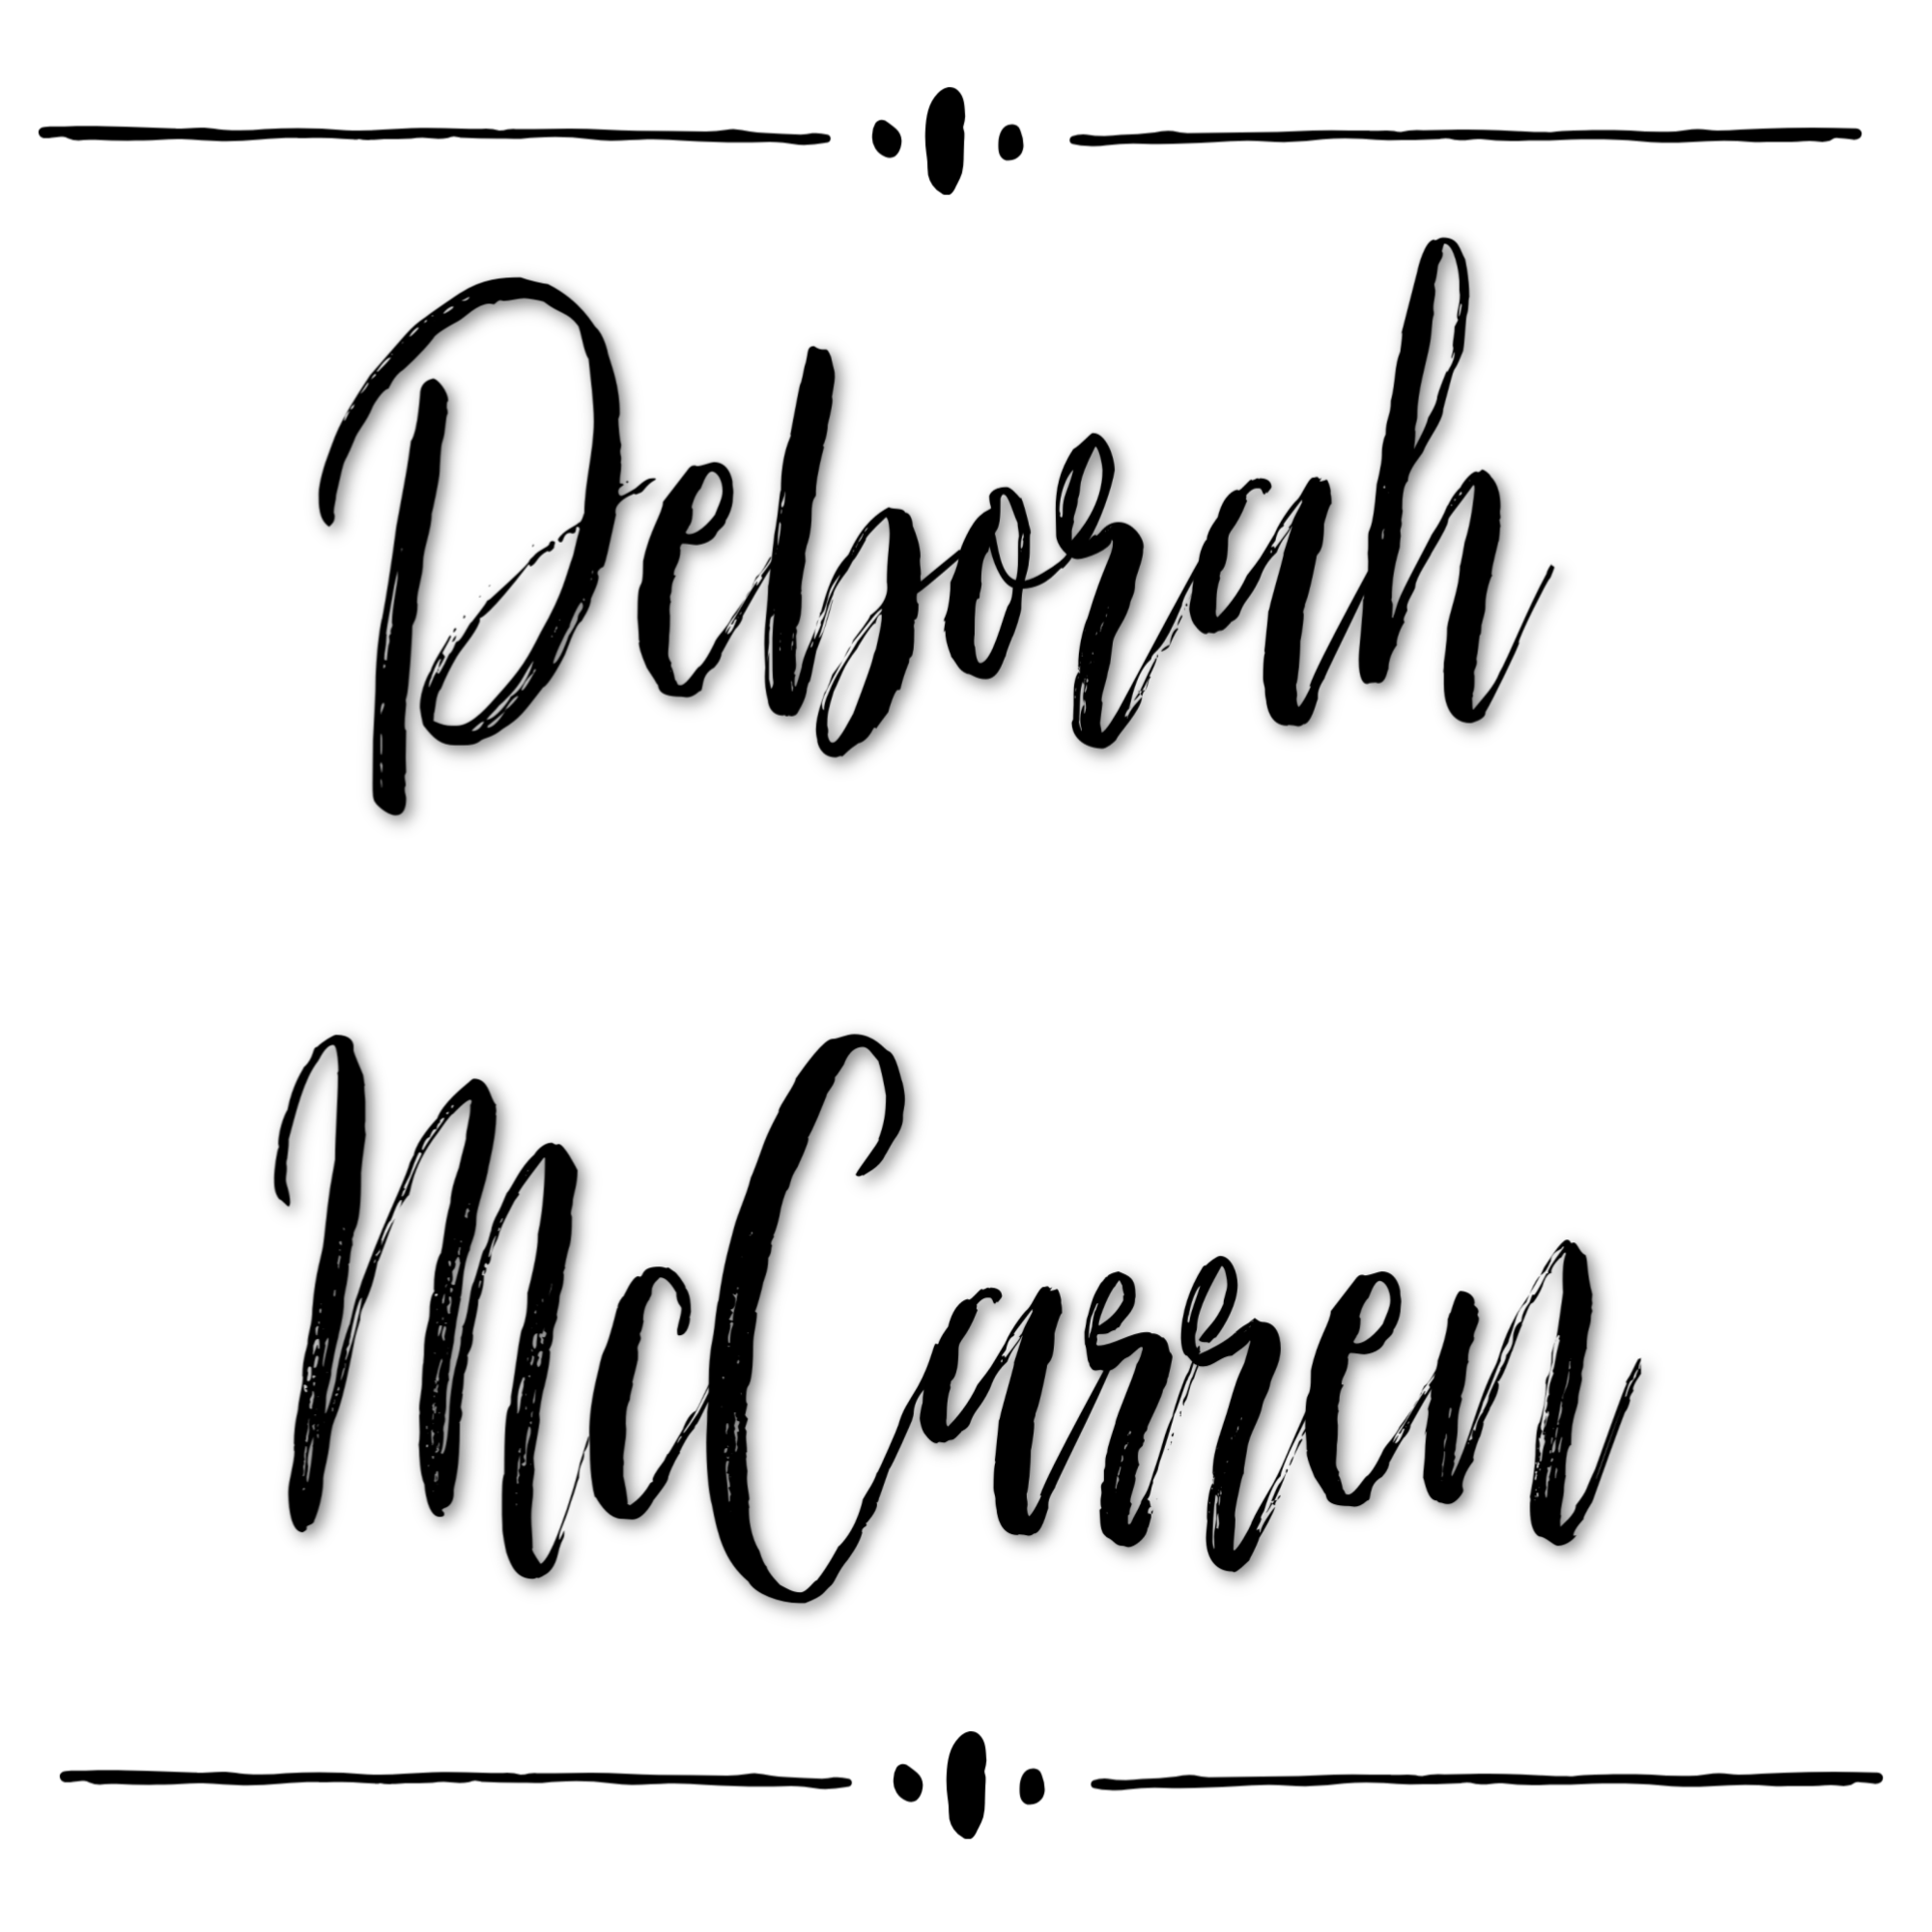 Deborah McCarren